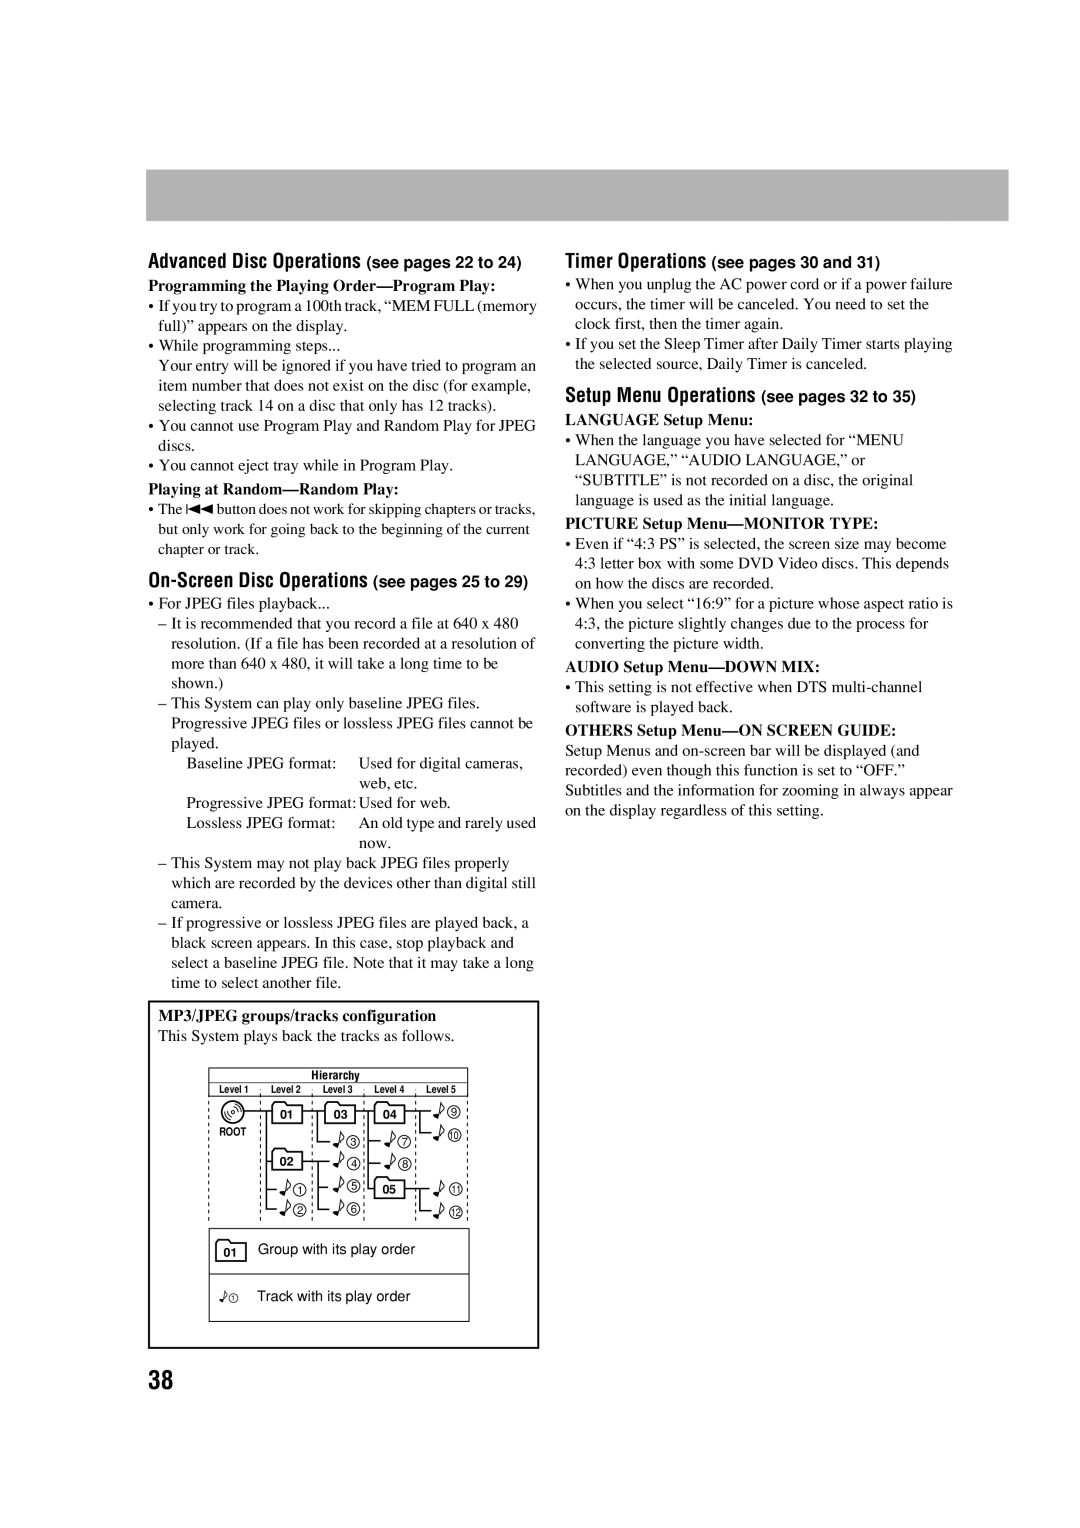 JVC CA-FSGD7 Setup Menu Operations see pages 32 to, Advanced Disc Operations see pages 22 to, Playing at Random—RandomPlay 